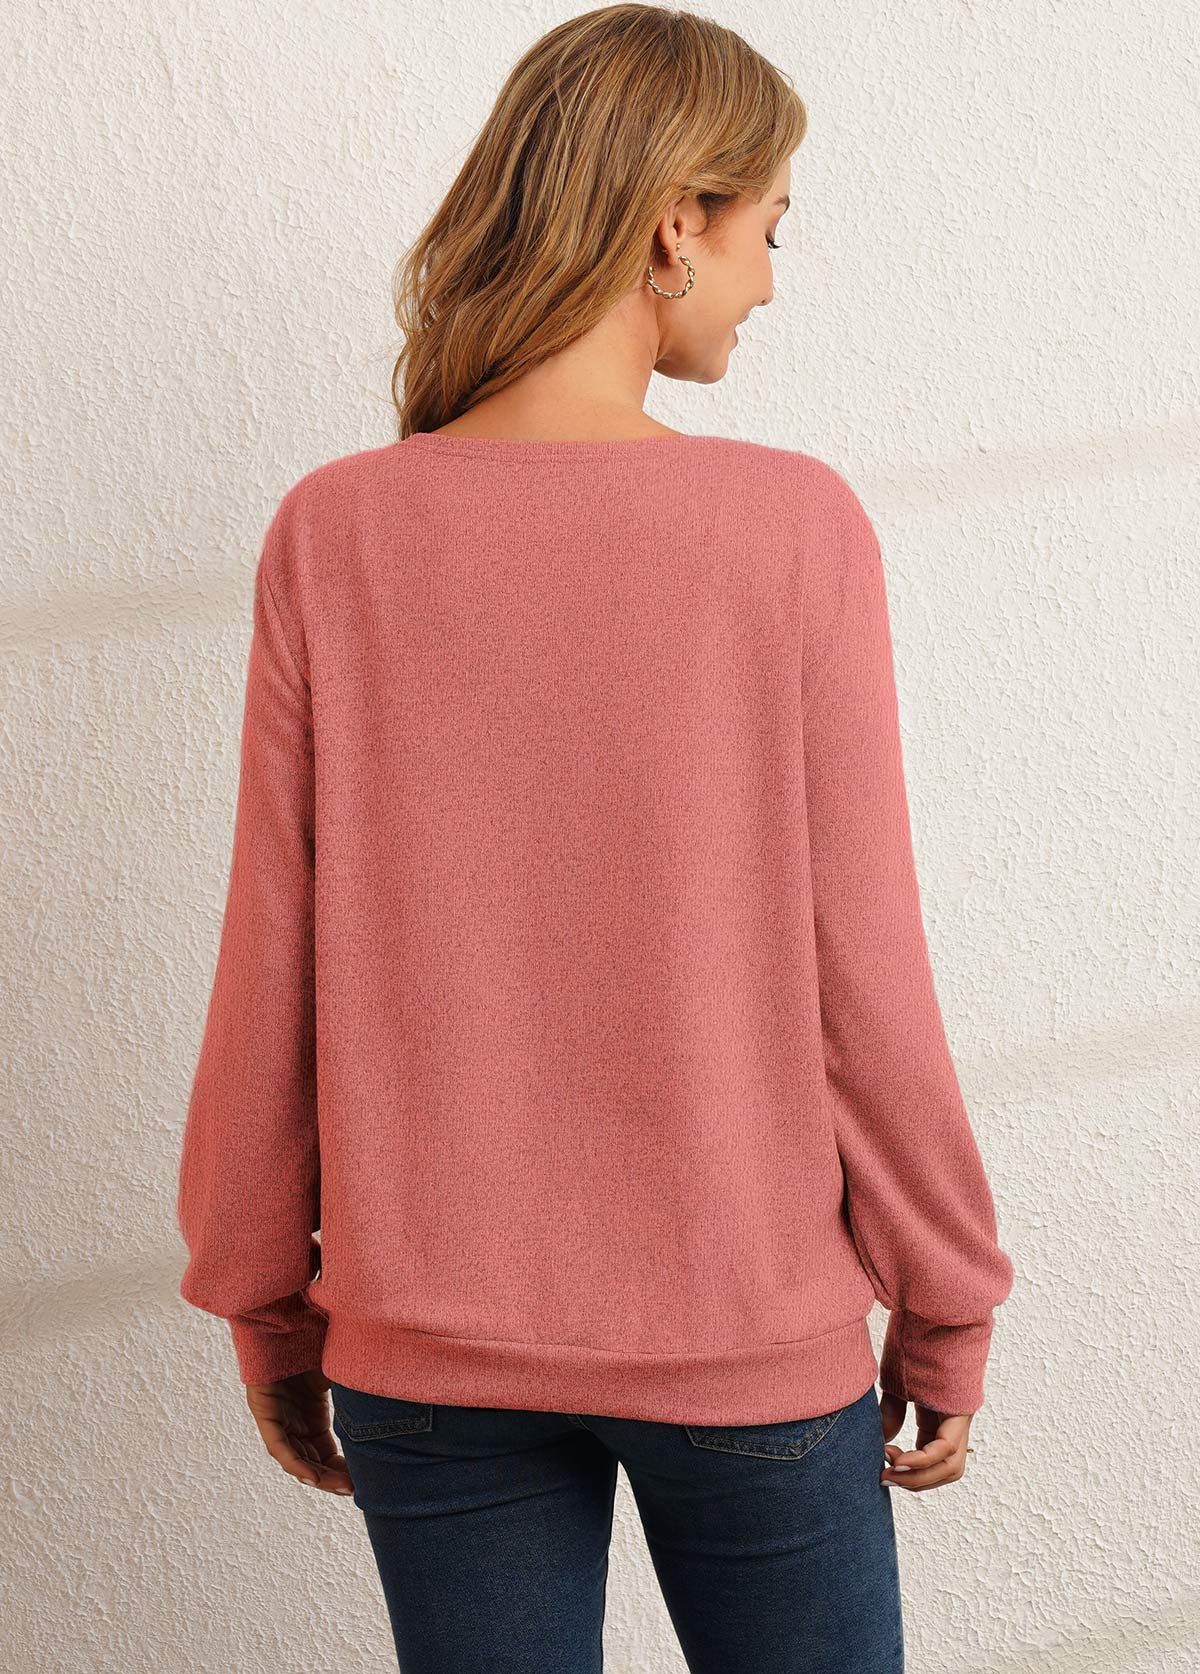 Decorative Button Long Sleeve Pink Sweatshirt